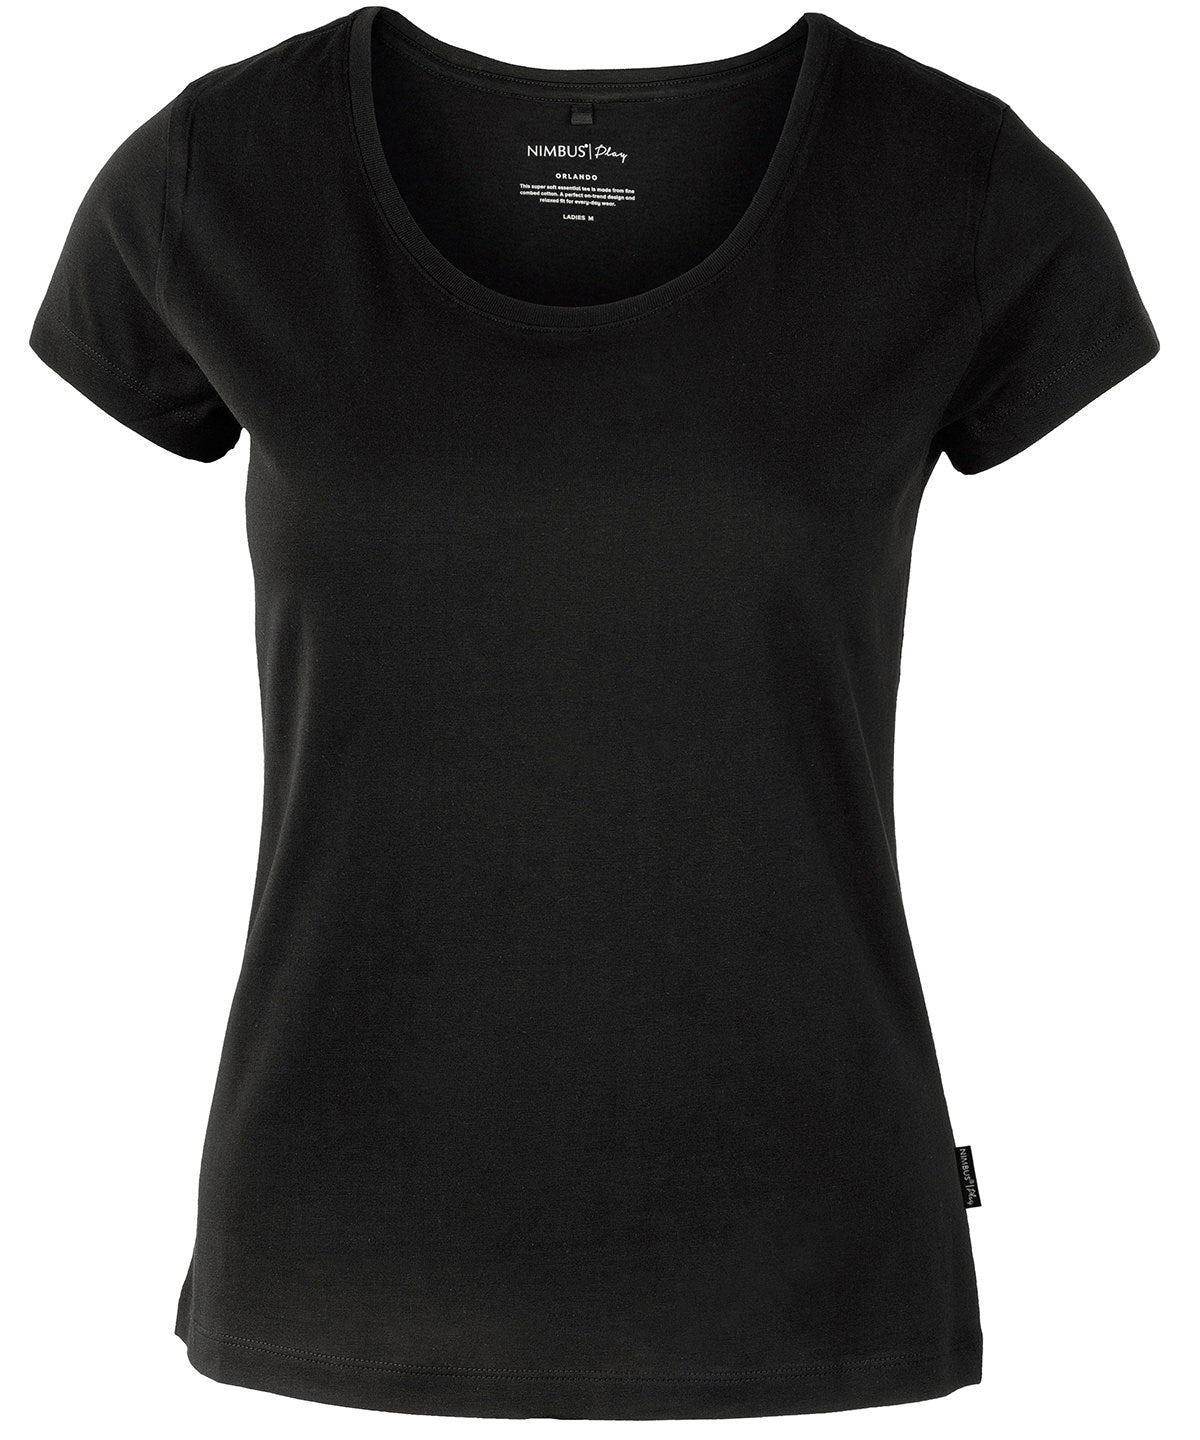 Stuttermabolir - Women’s Orlando – Soft Round Neck T-shirt